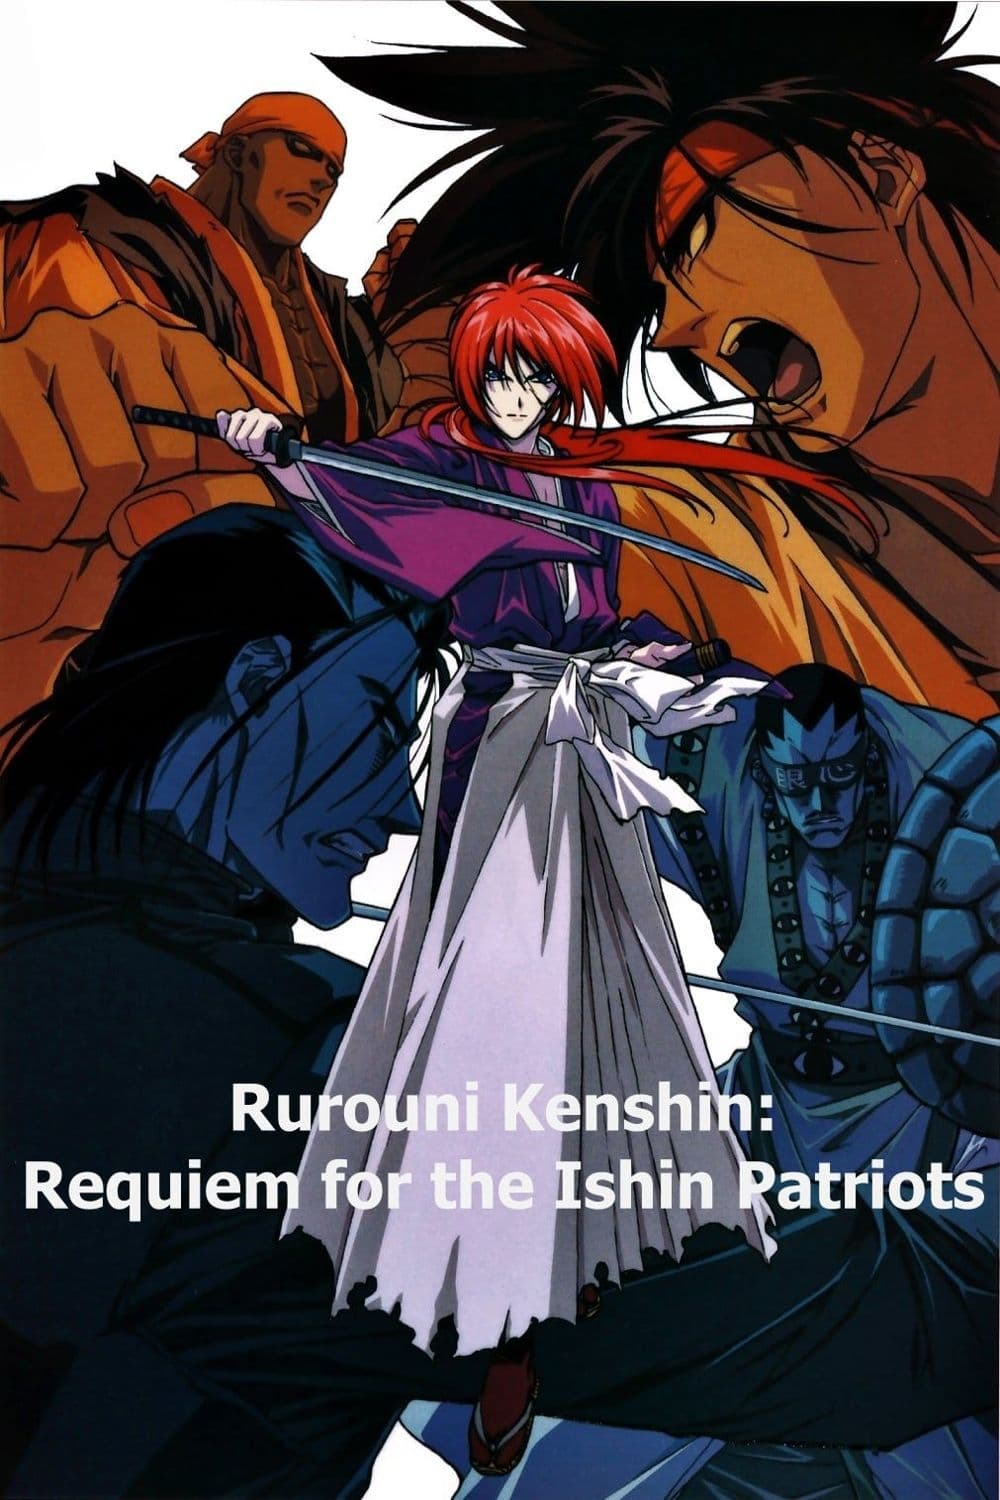 Kenshin, le vagabond : Requiem pour les Ishin Shishi (1997)